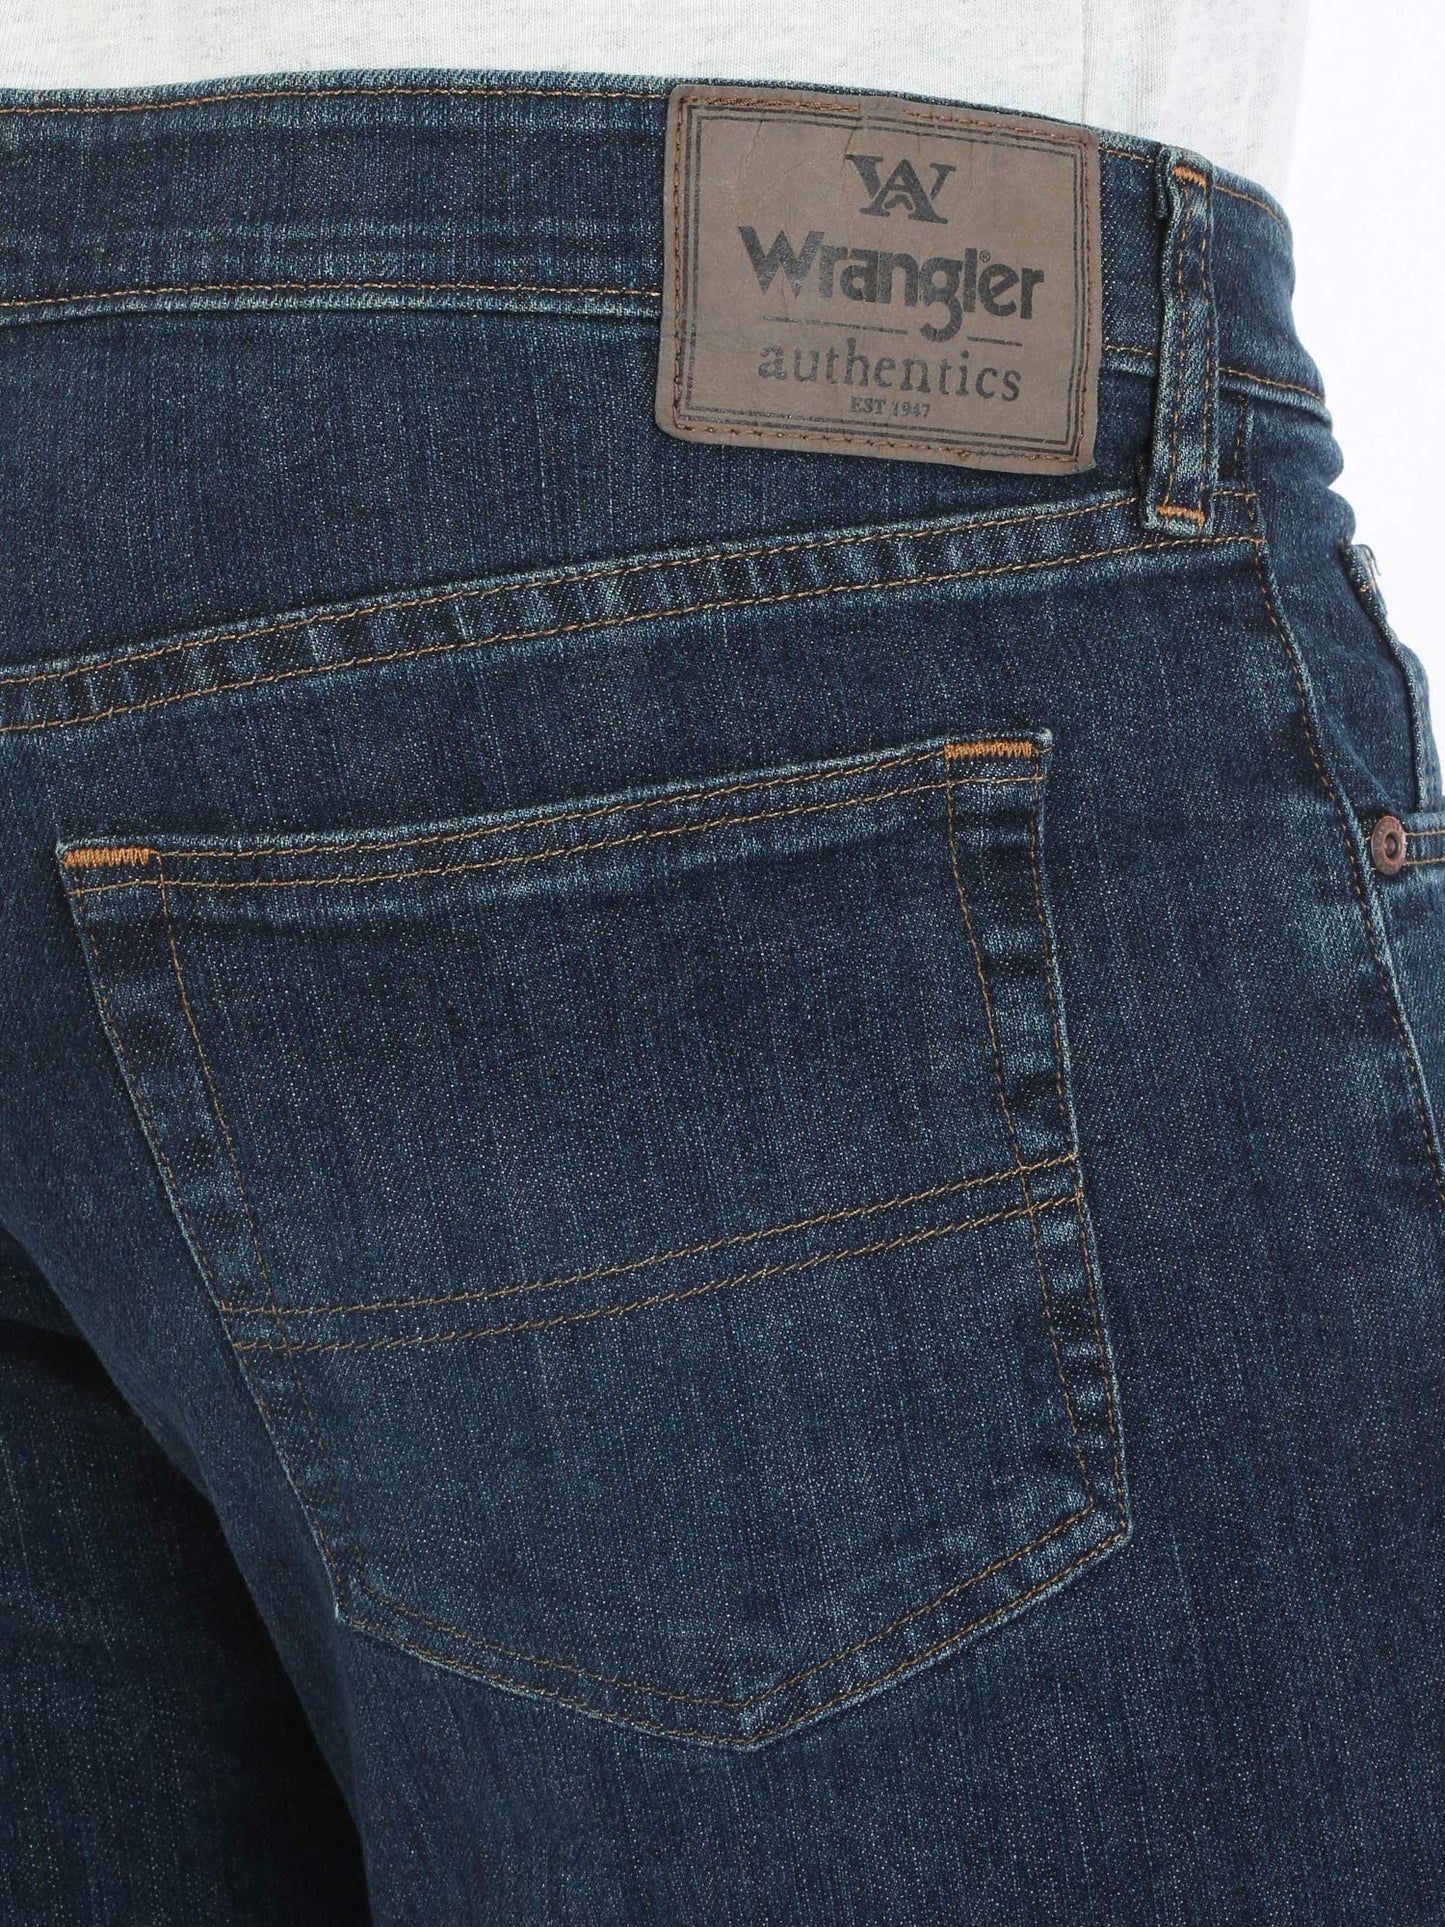 Wrangler Authentics Men's Big & Tall Comfort Flex Waist Relaxed Fit Jean, Carbon, 52W X 32L